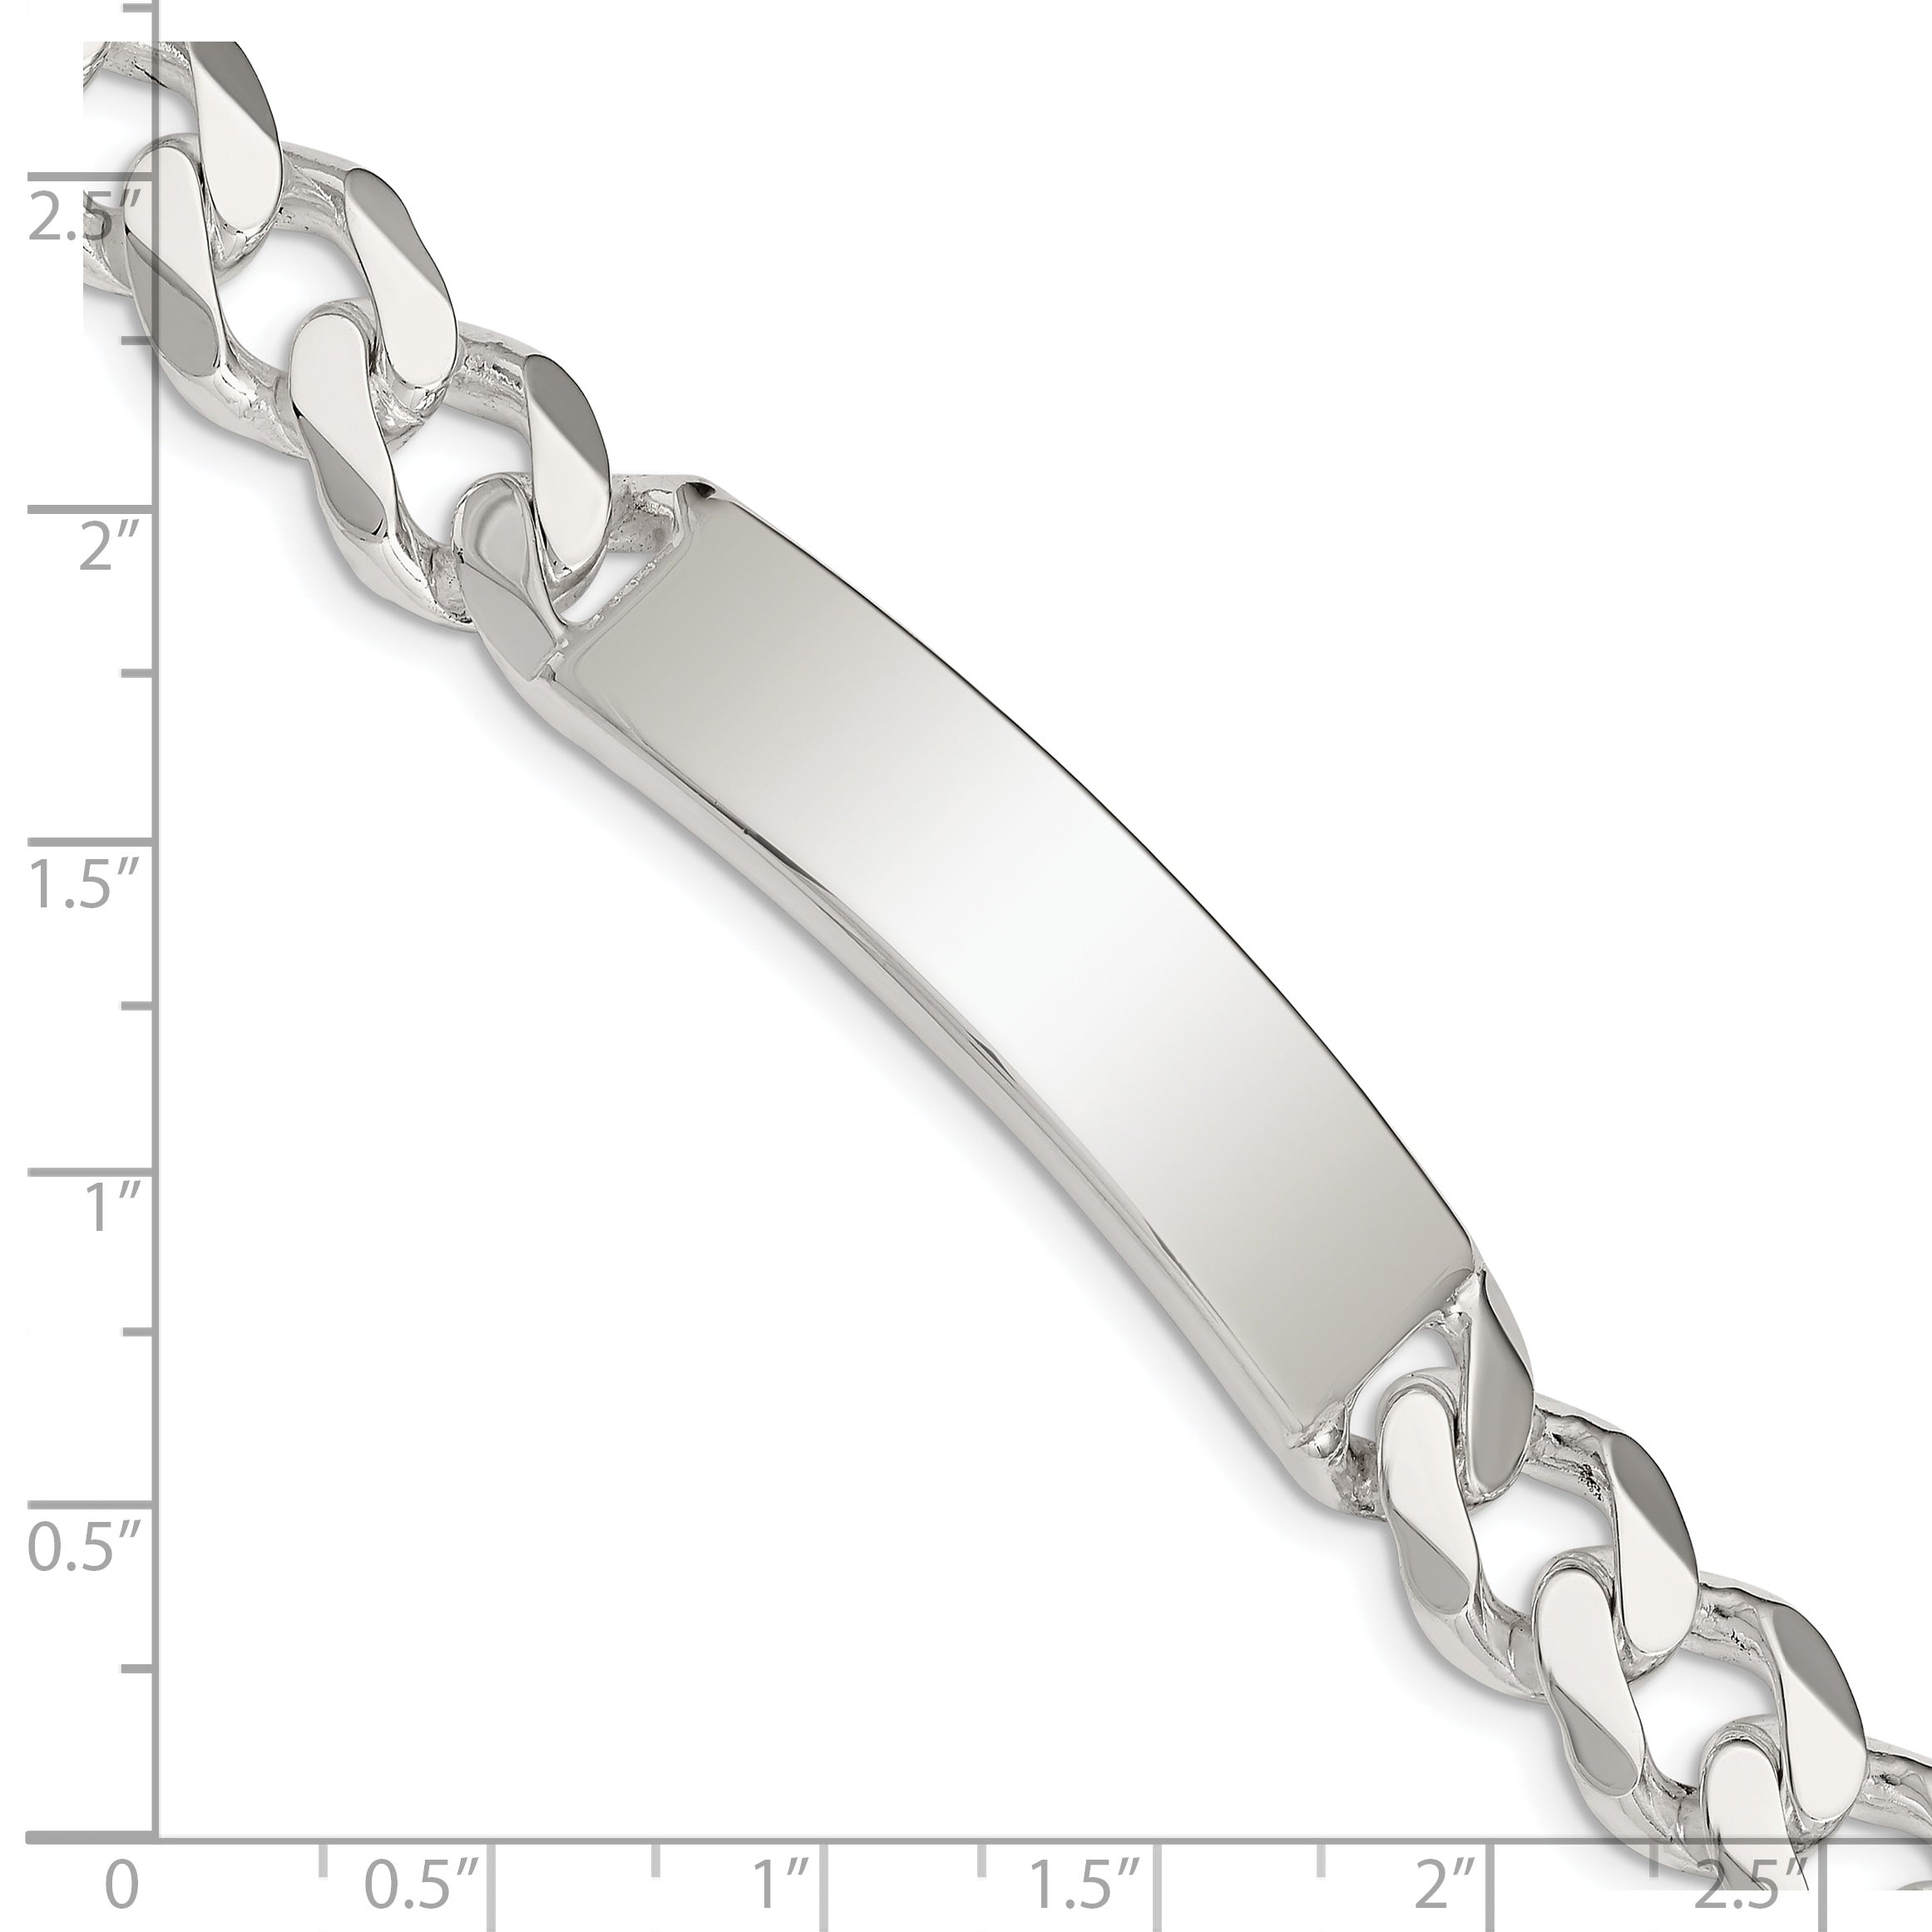 Sterling Silver Curb Link ID Bracelet